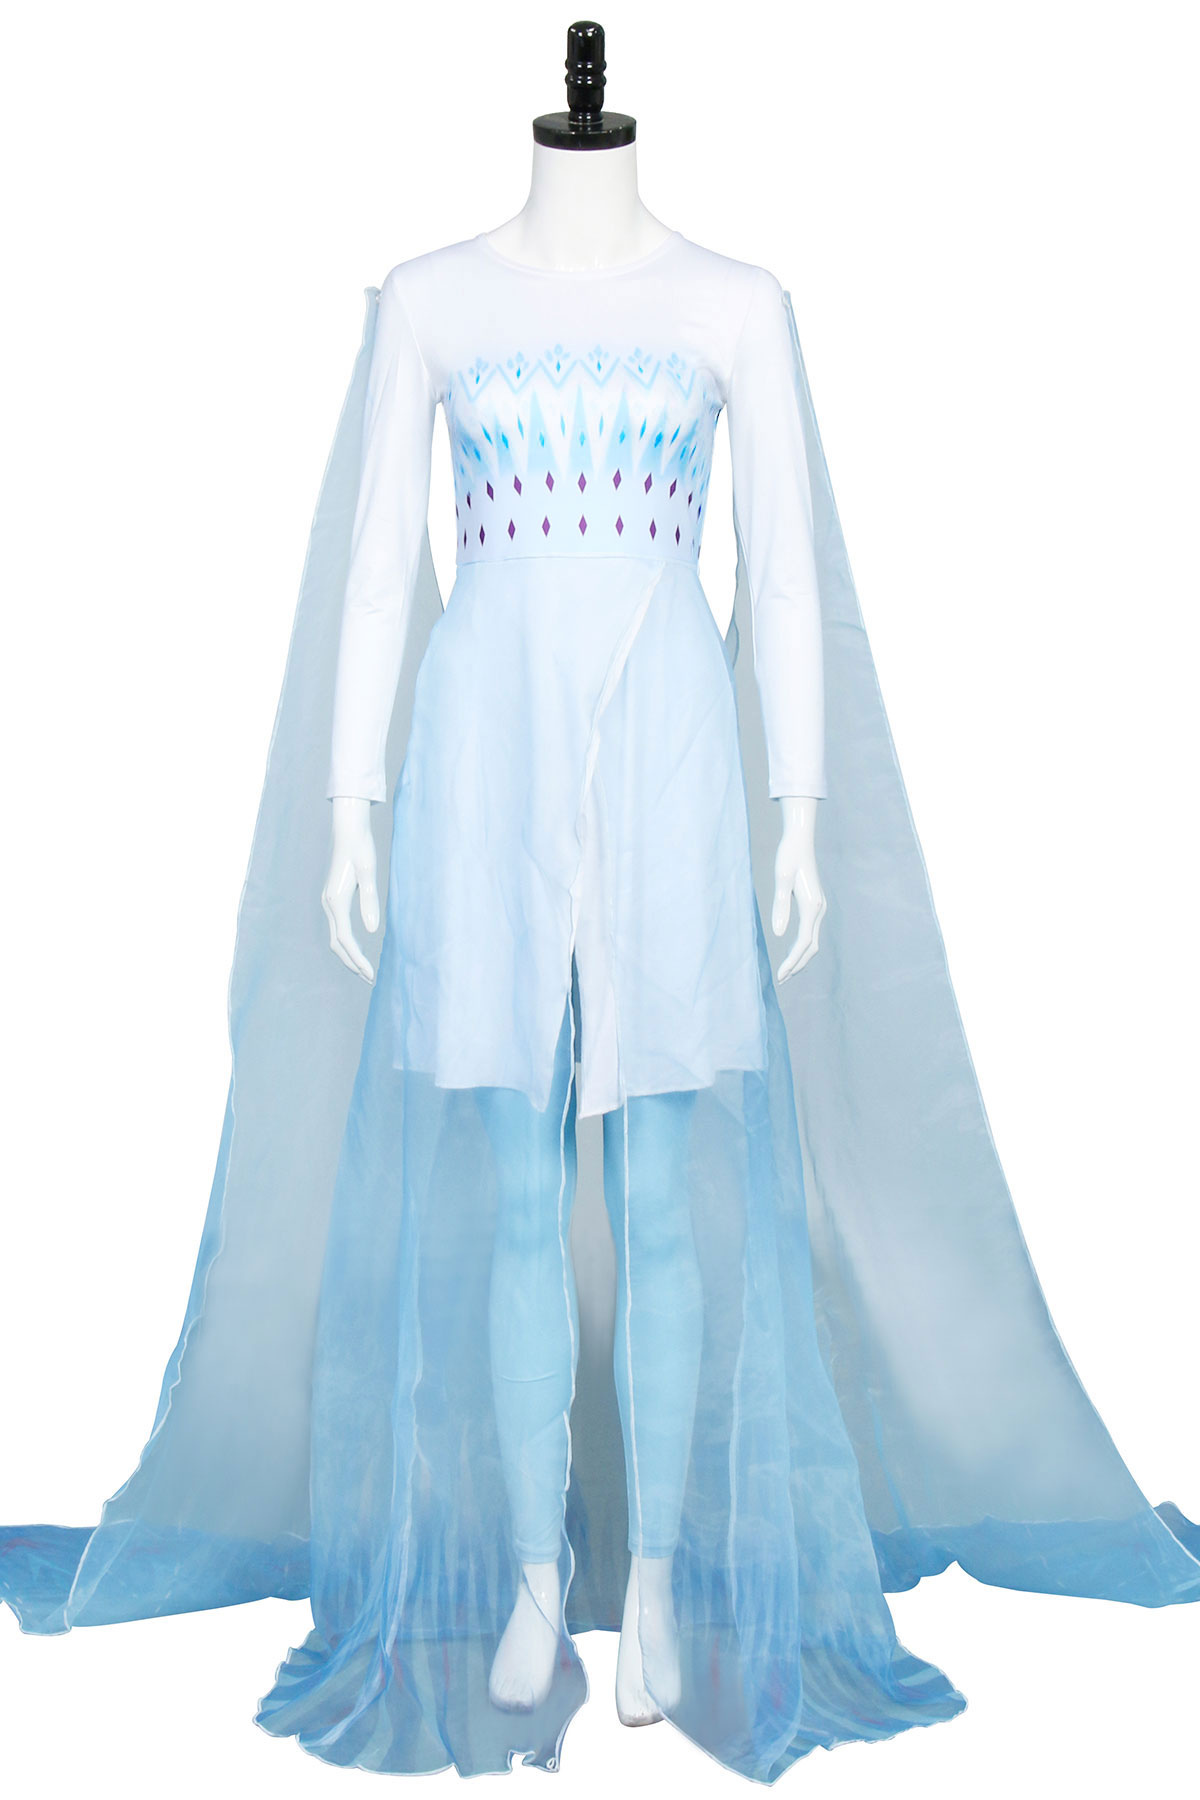 Disney Frozen 2 Elsa Ahtohallan Cave Queen White Blue Gown Dress Halloween Cosplay Costume-Takerlama